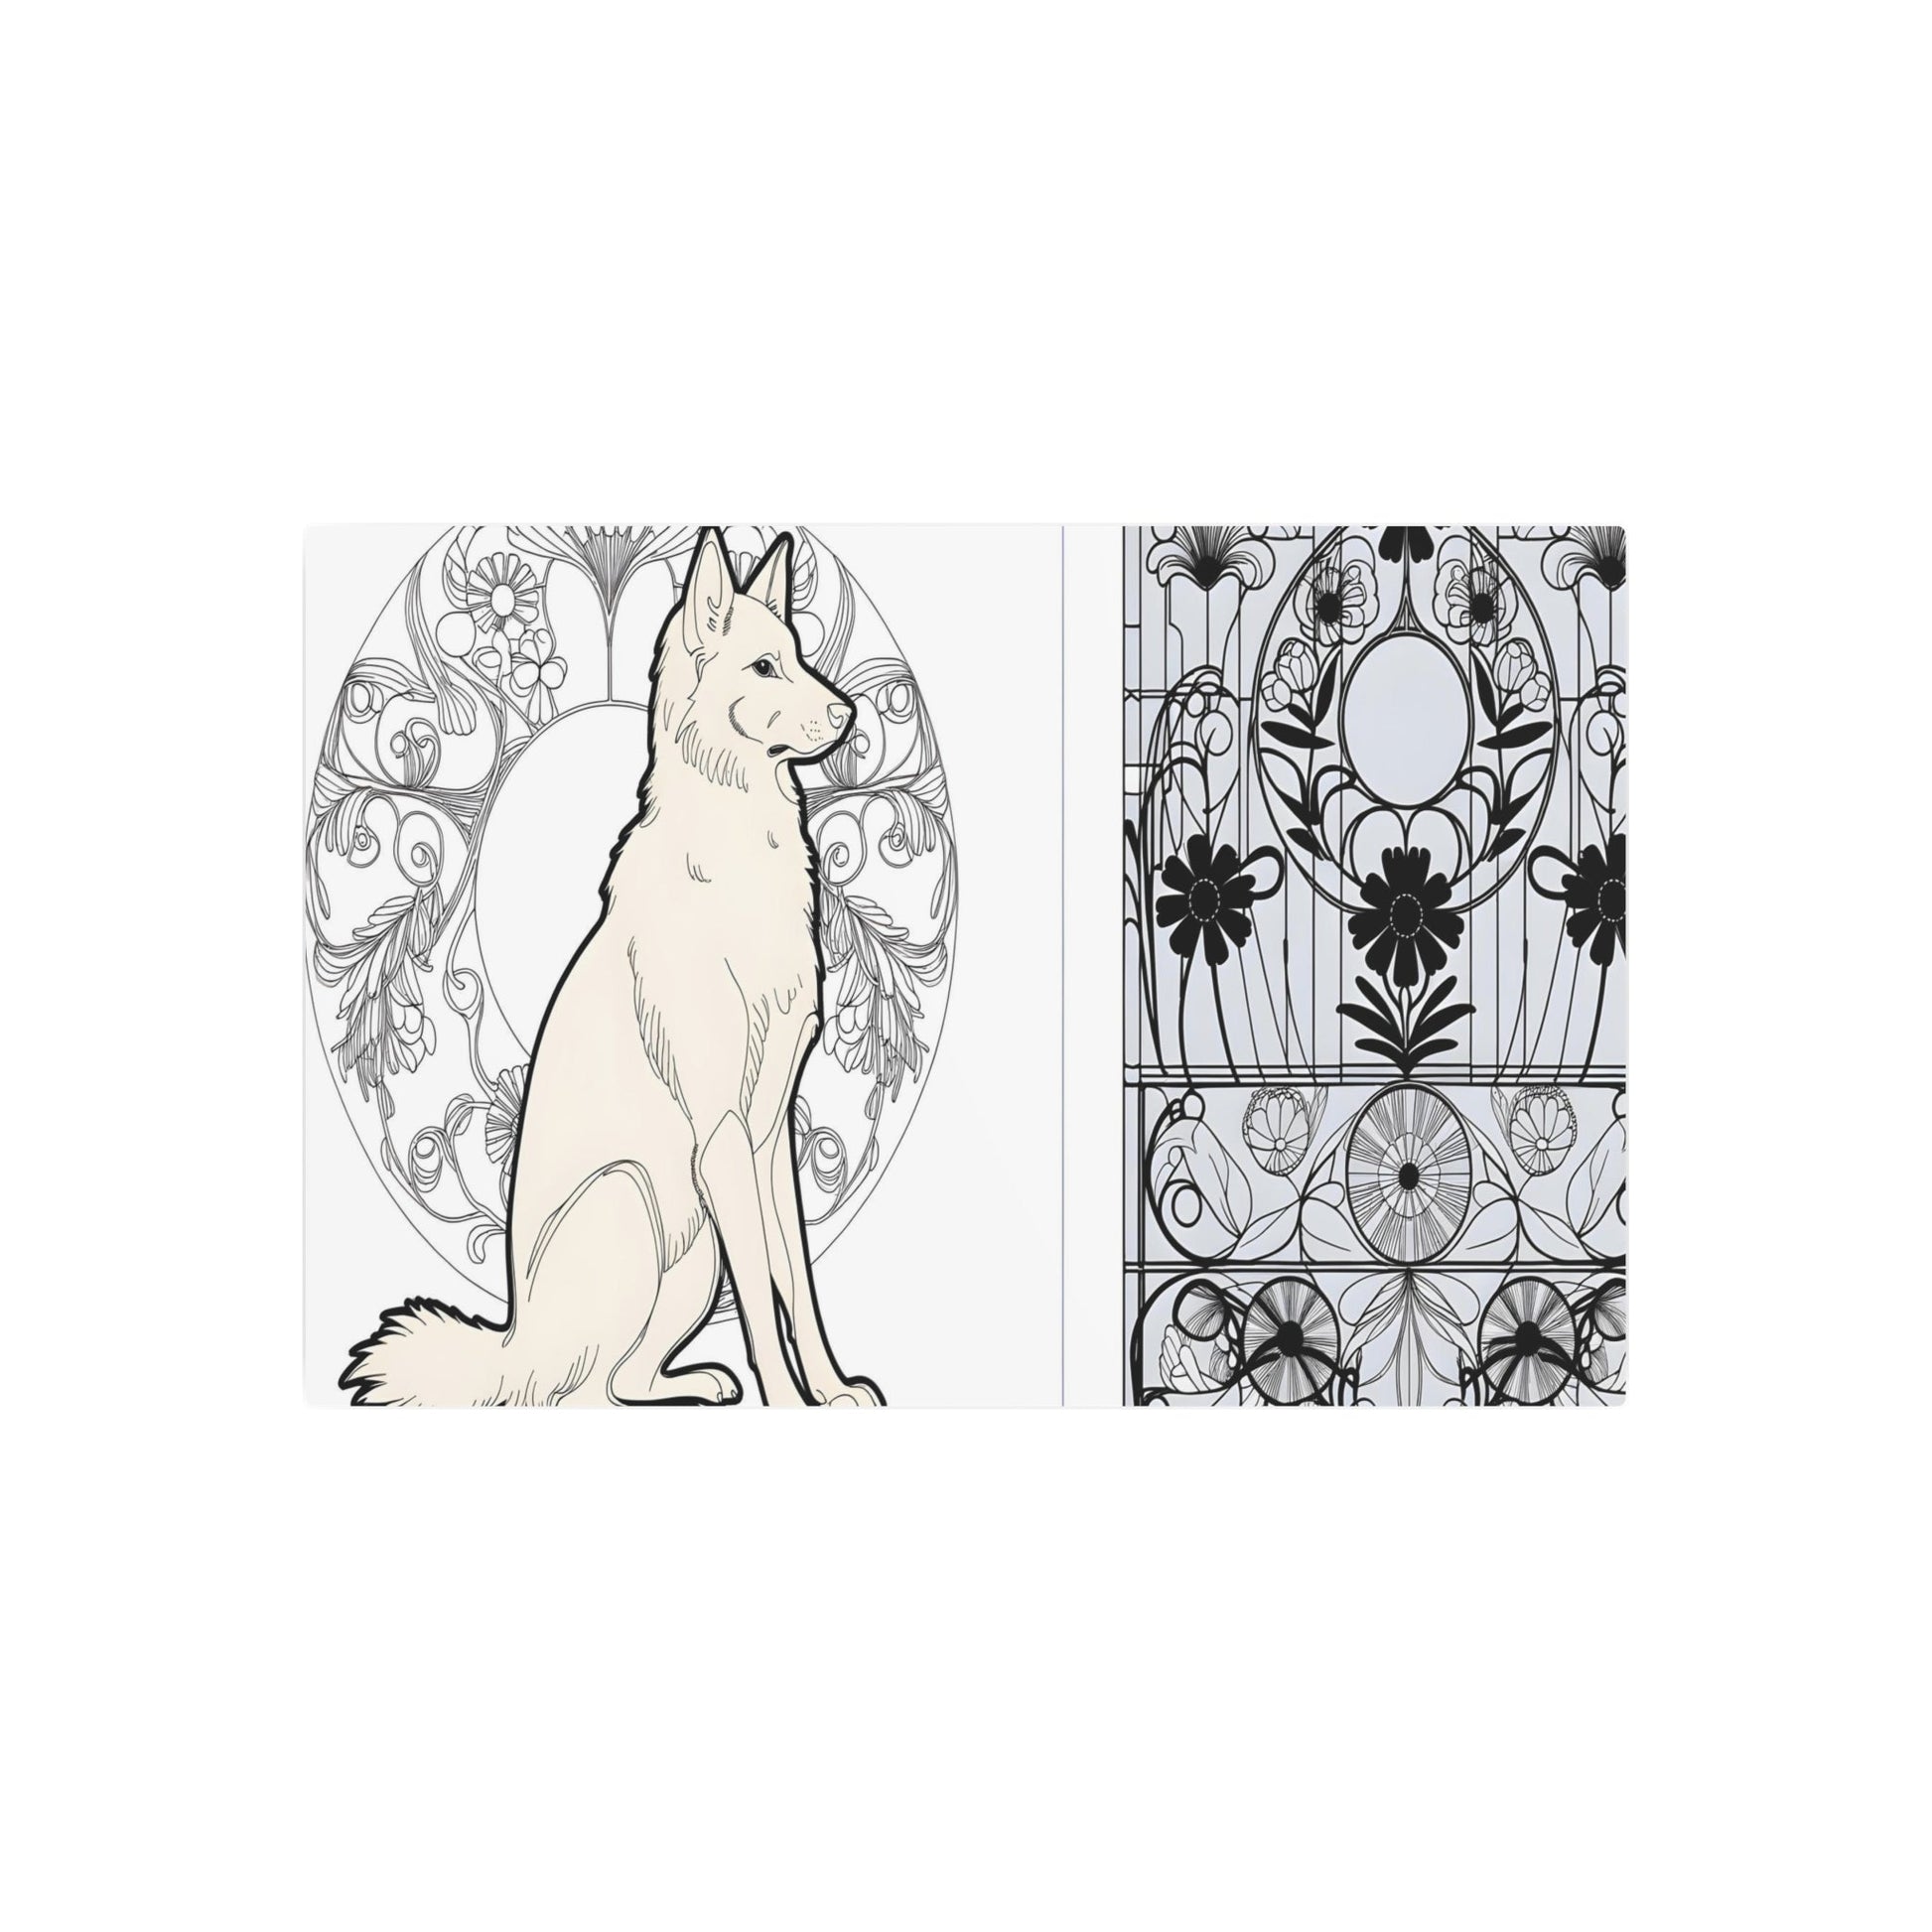 Metal Poster Art | "Art Nouveau Inspired Dog Illustration with Elegant Botanical Motifs - Late 19th & Early 20th Century Western Art Styles" - Metal Poster Art 36″ x 24″ (Horizontal) 0.12''